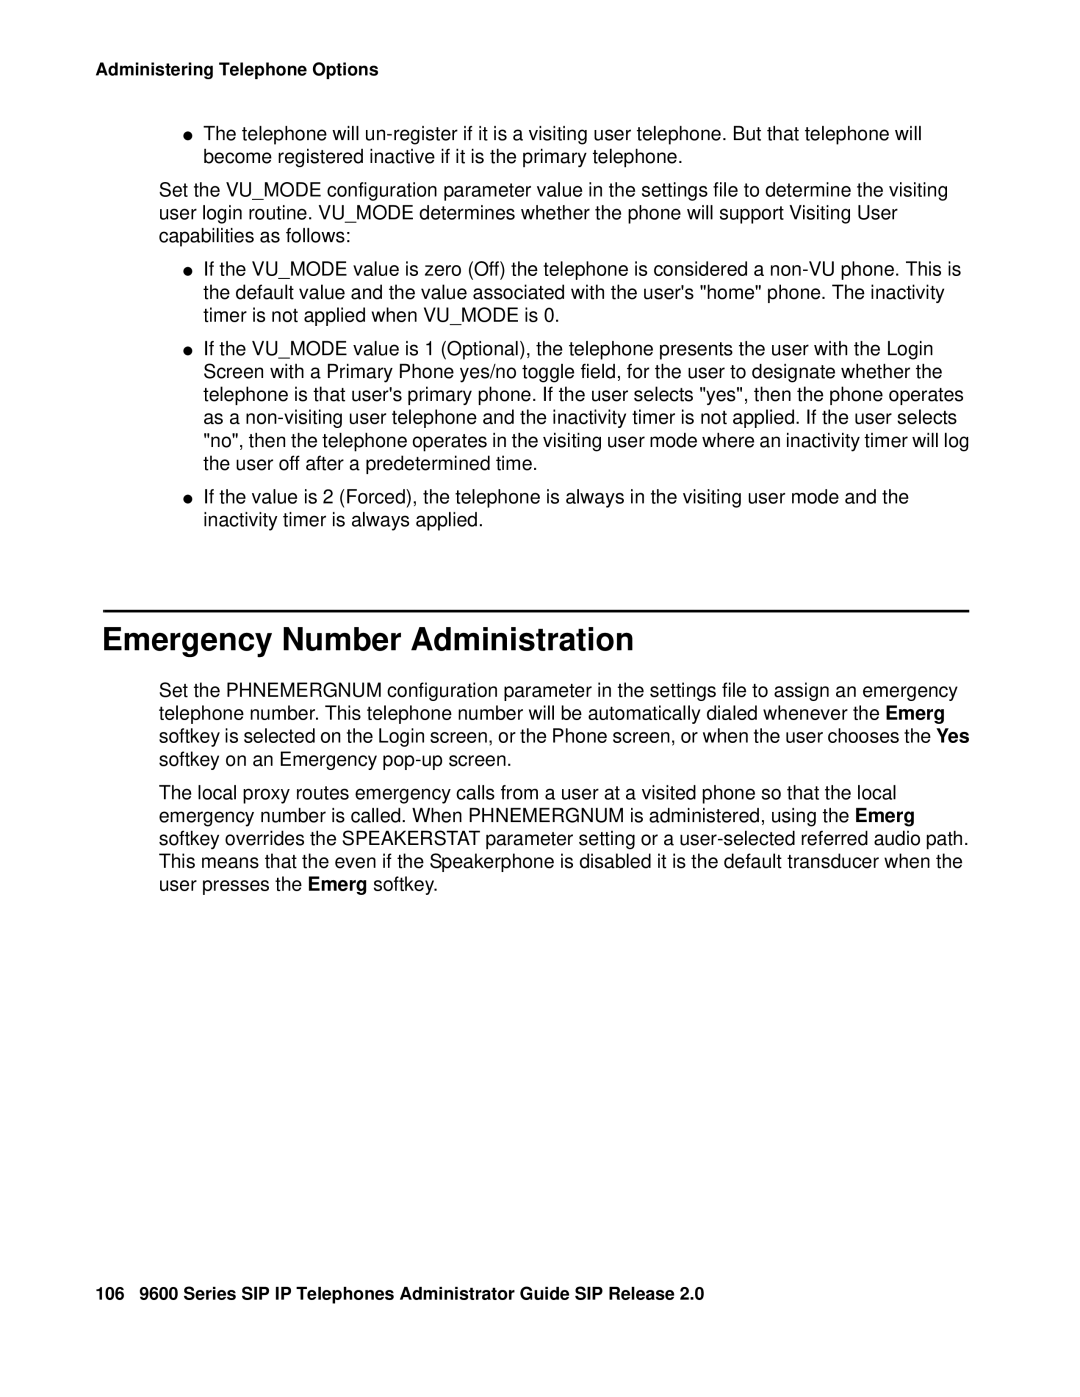 Avaya 9600 manual Emergency Number Administration 